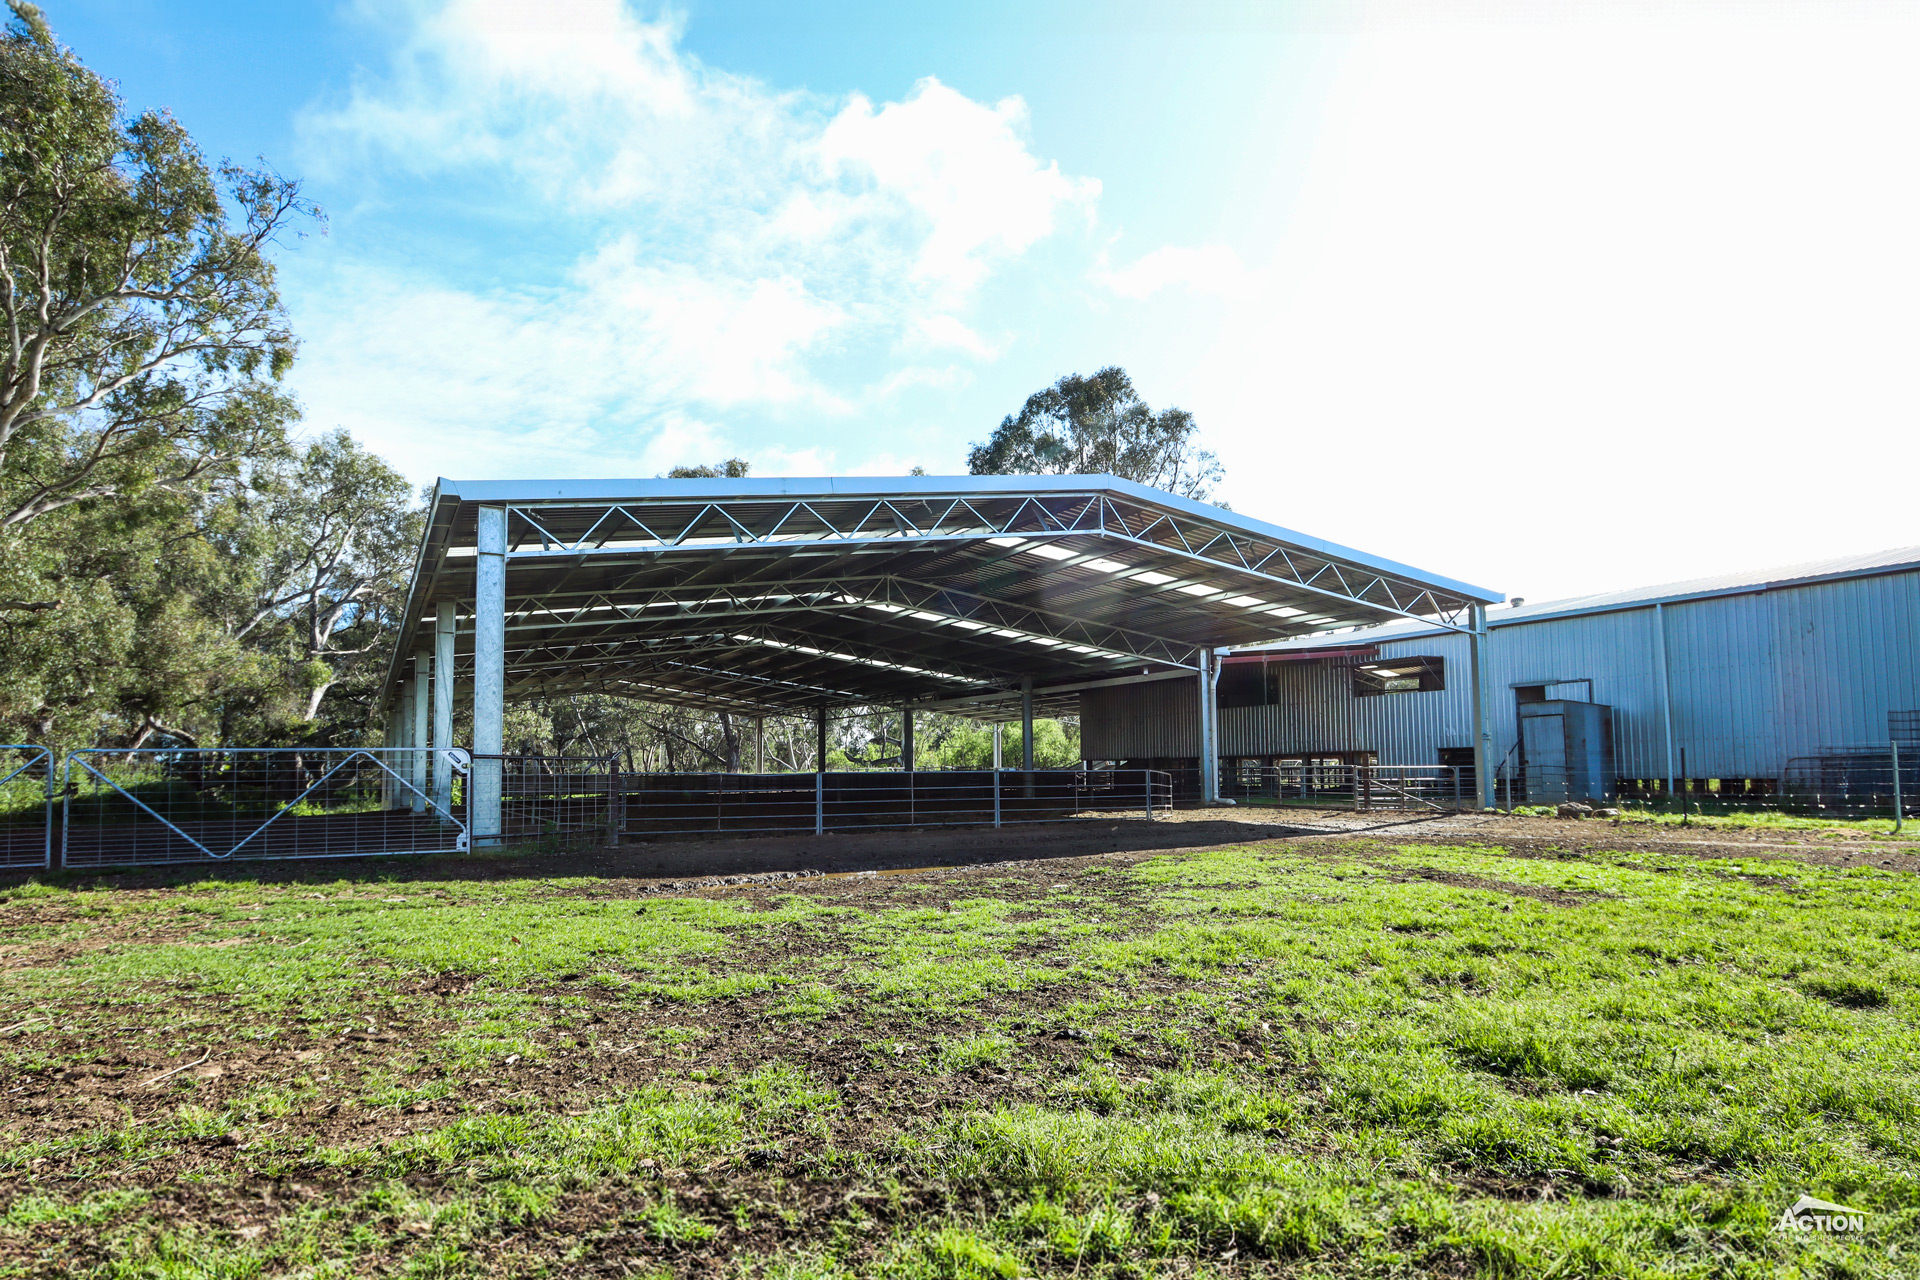 Sheep yard cover at Holbrook NSW